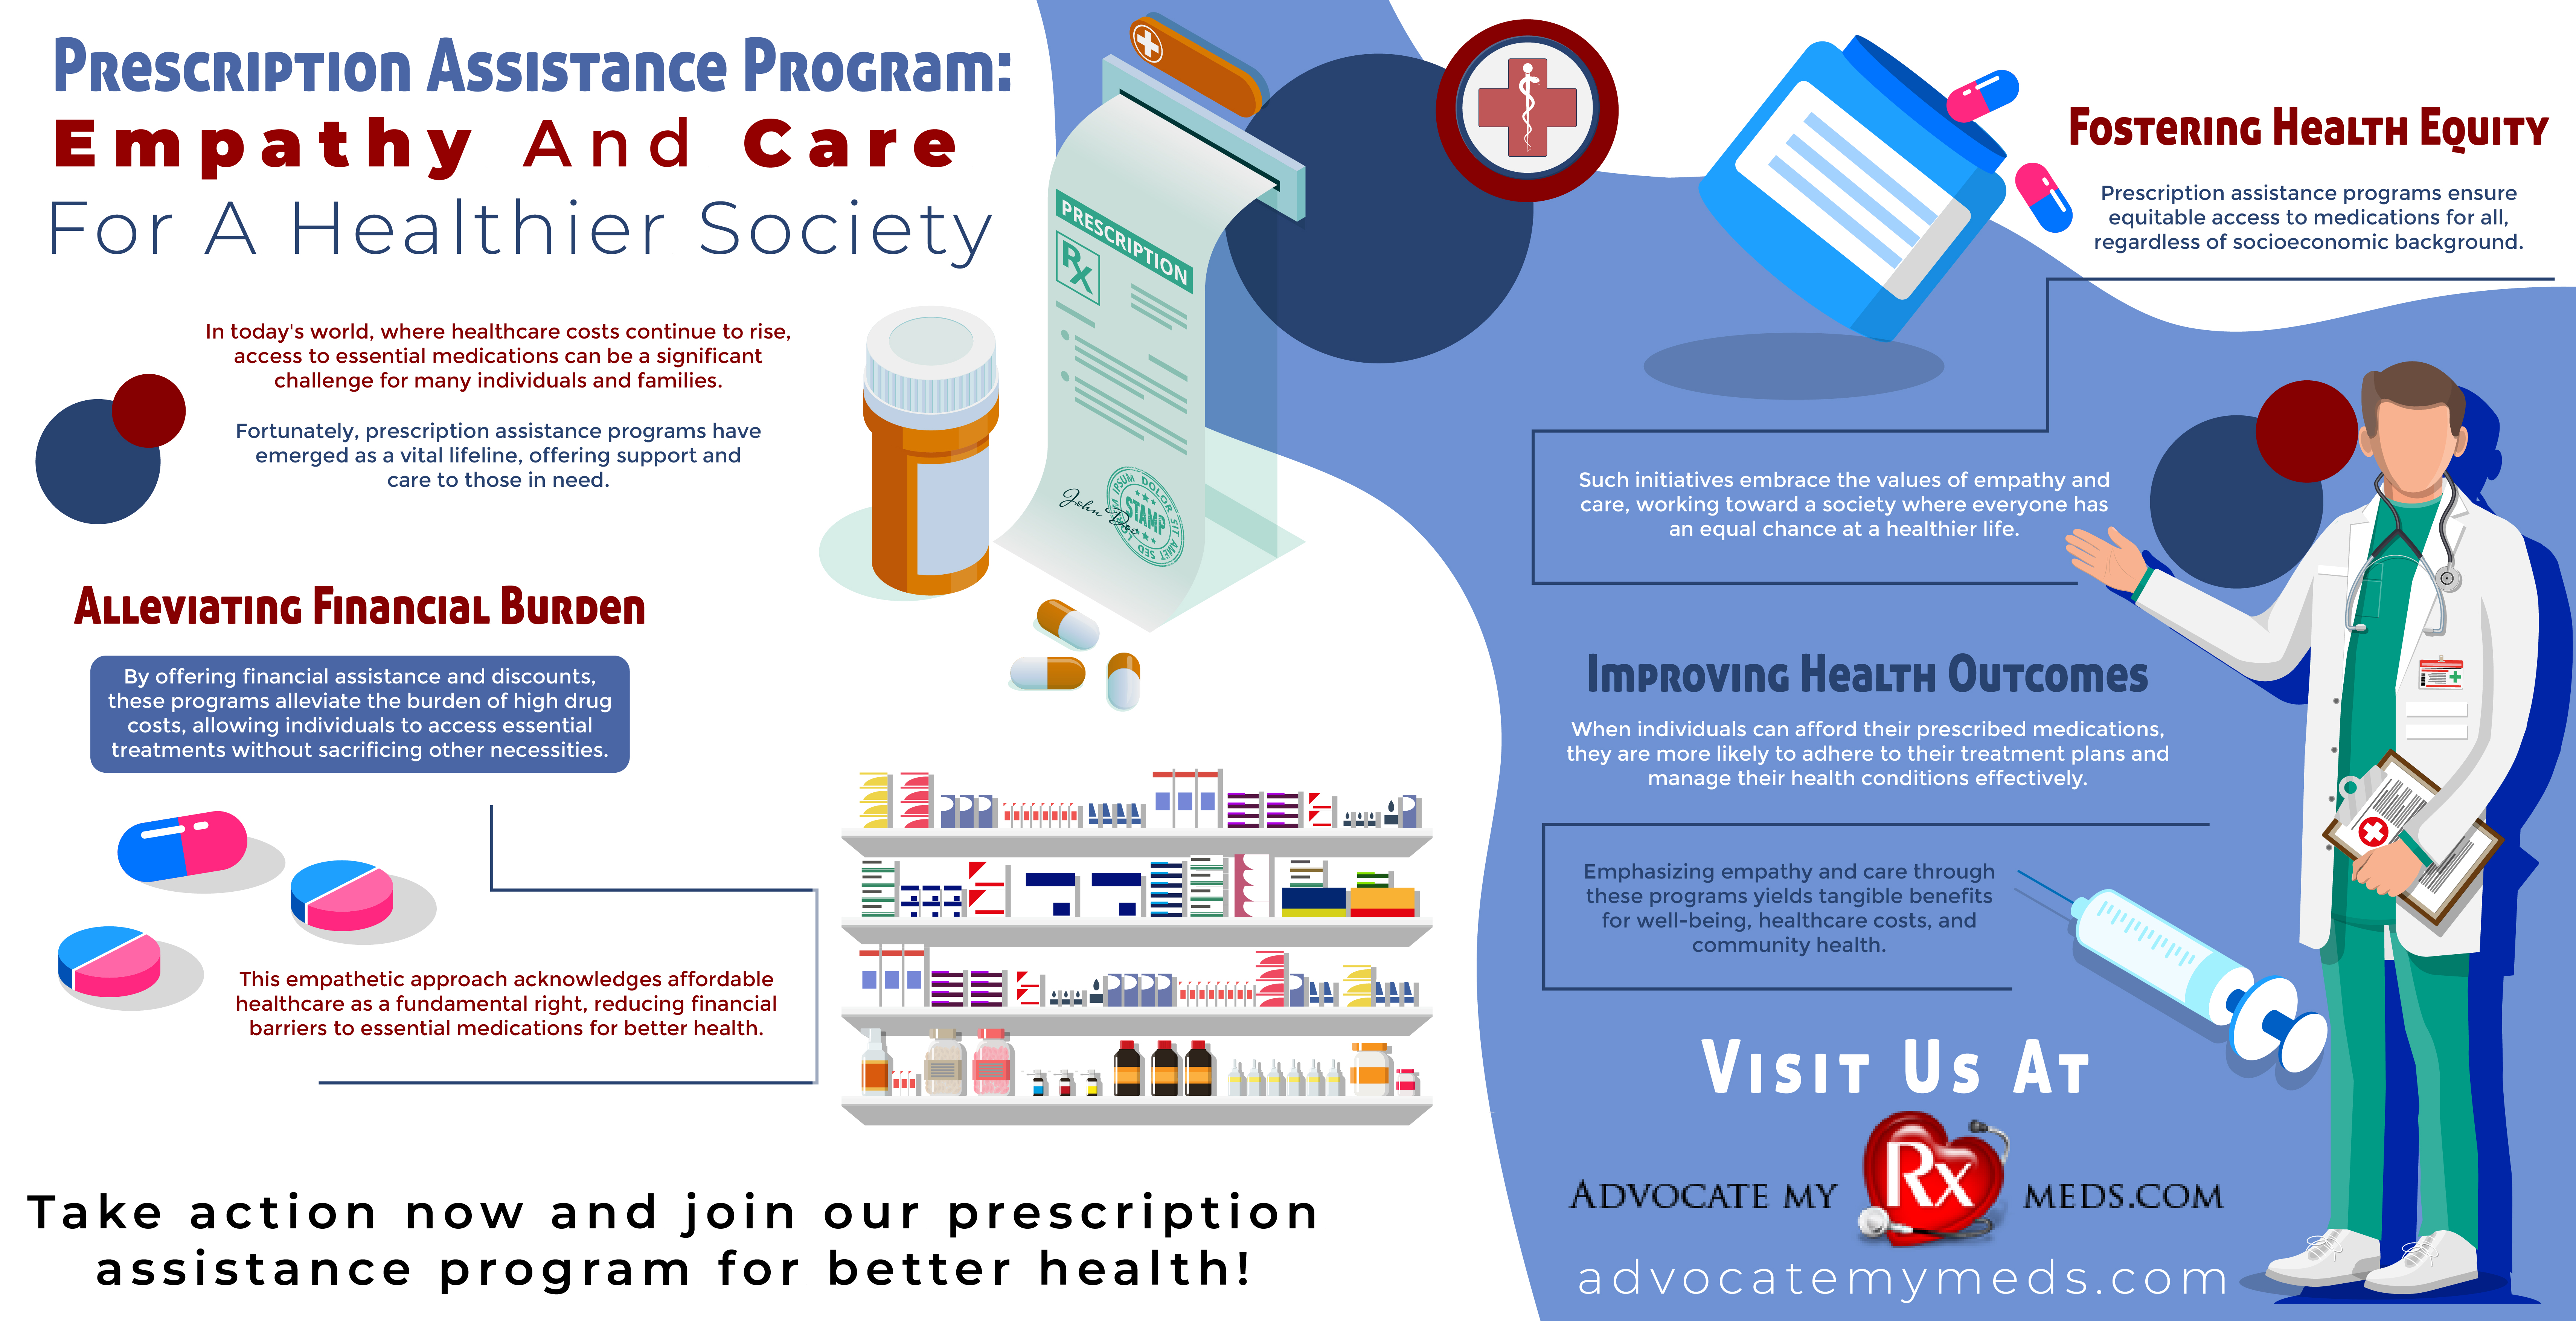 Prescription Assistance Program: Empathy And Care For A Healthier Society